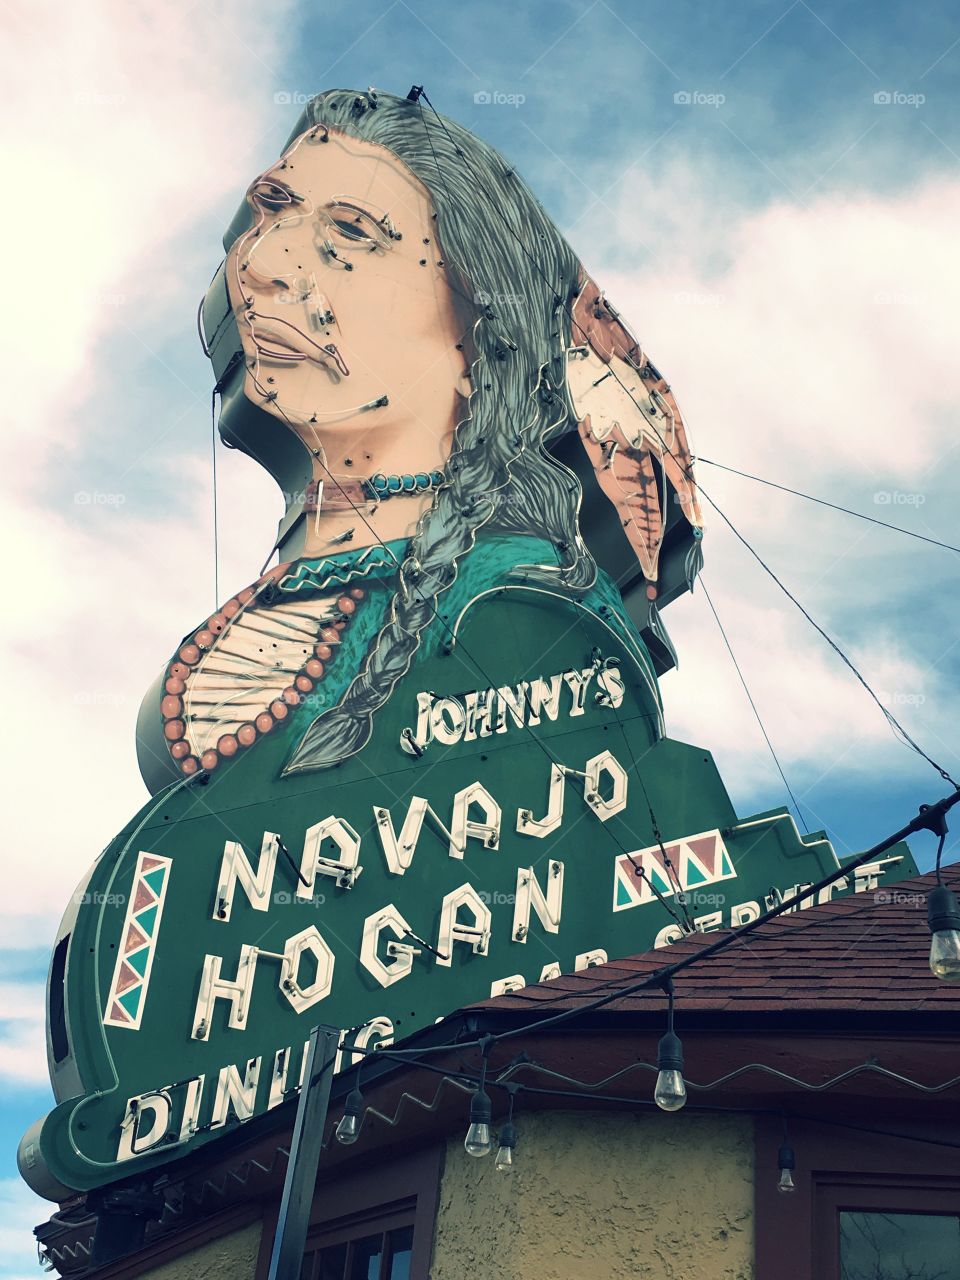 Johnny's Navaho Hogan restaurant and historic building